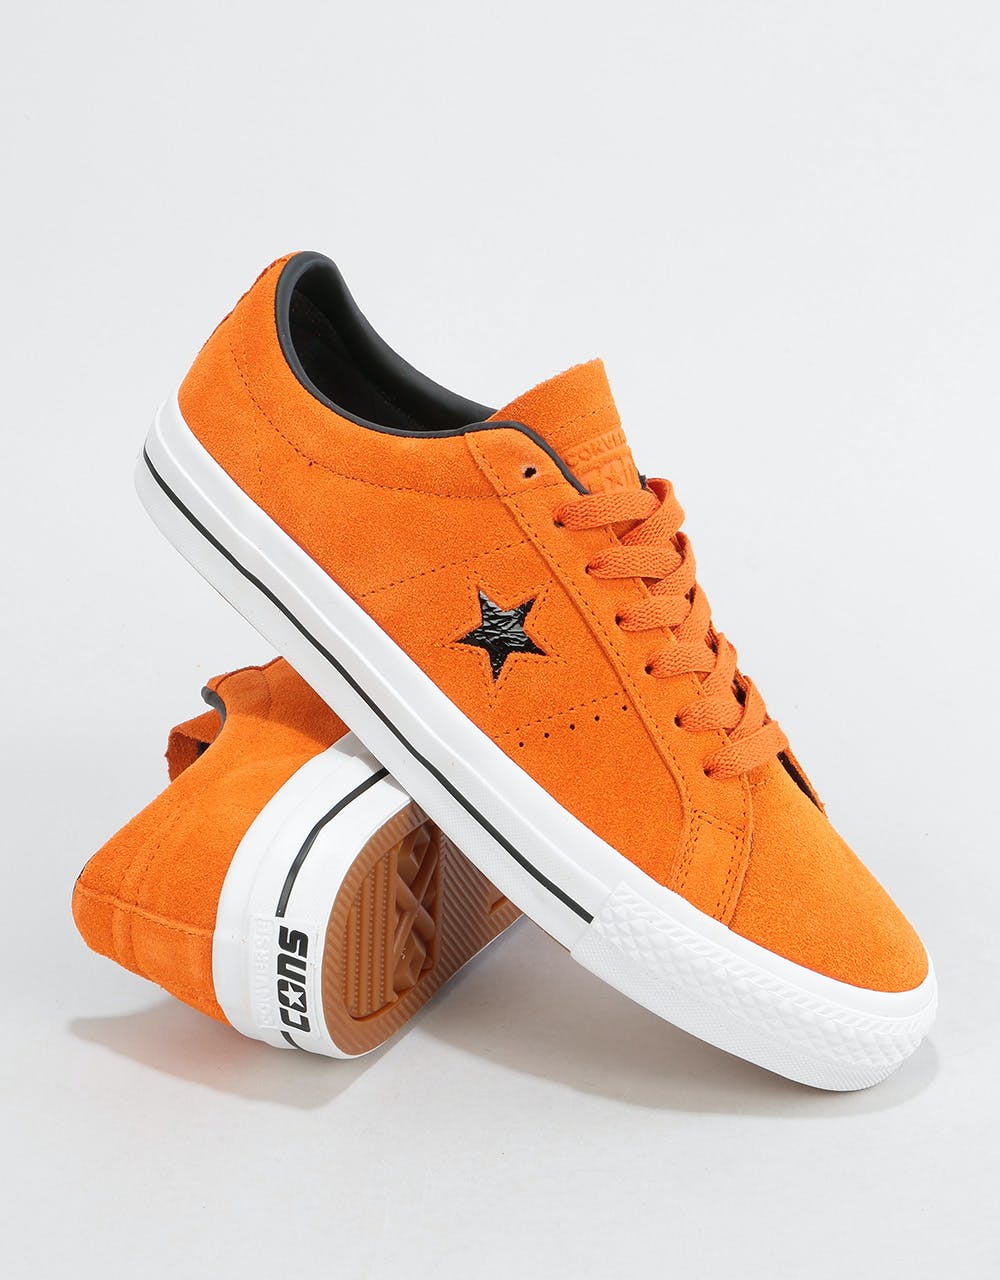 Converse One Star Pro Ox Skate Shoes - Campfire Orange/Black/White